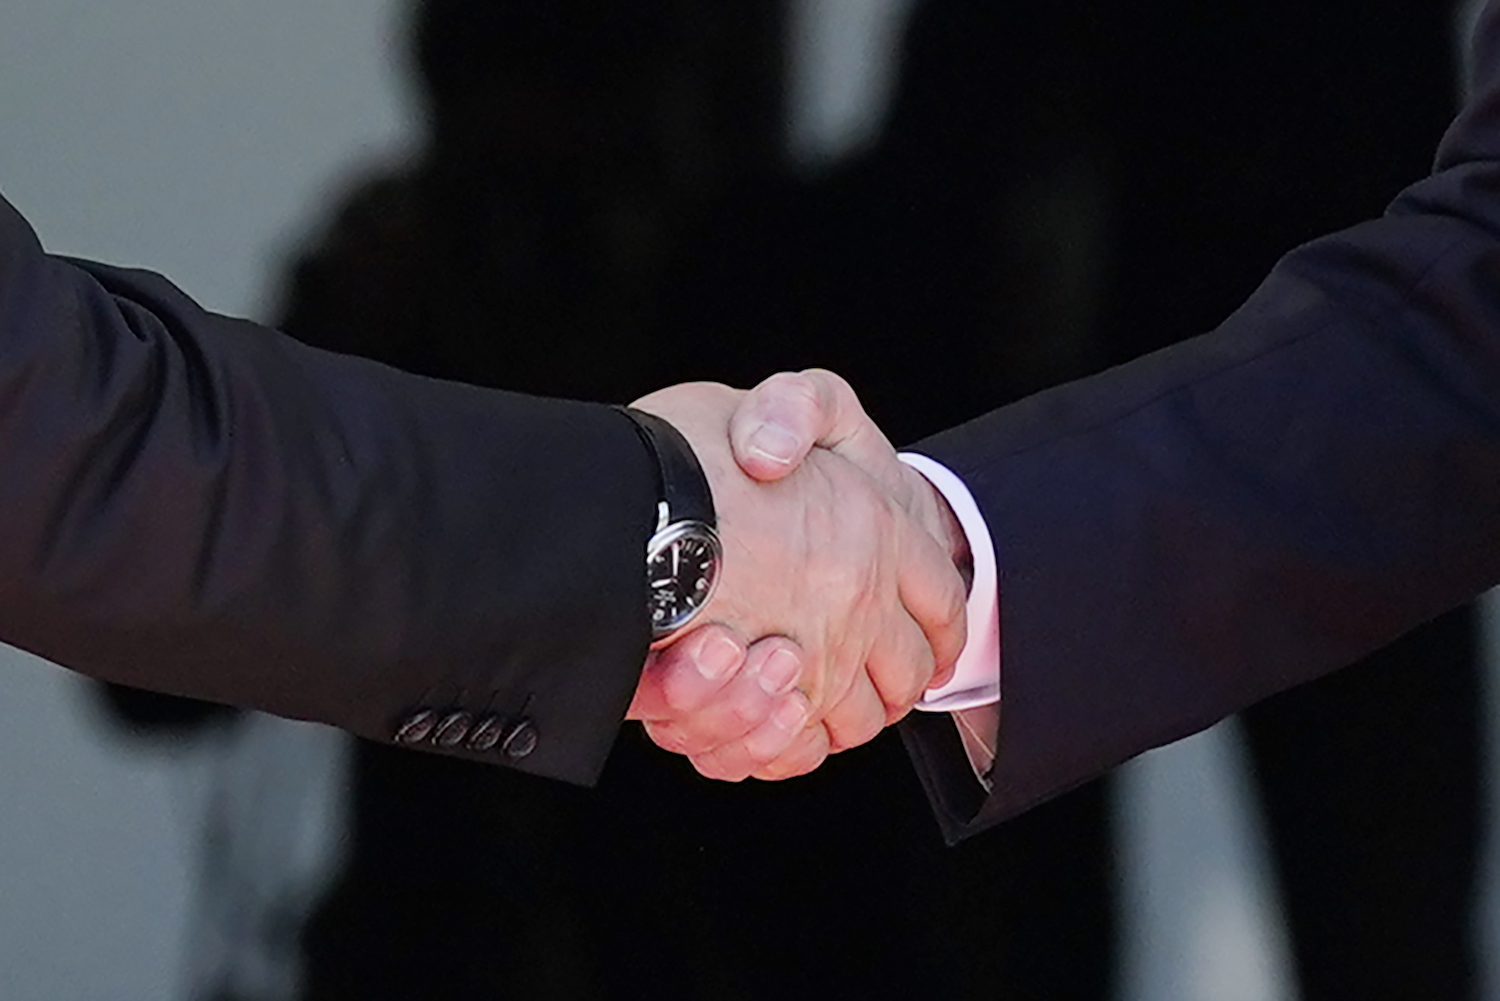 20210617-image-dpa-mb-Putin Biden Handshake